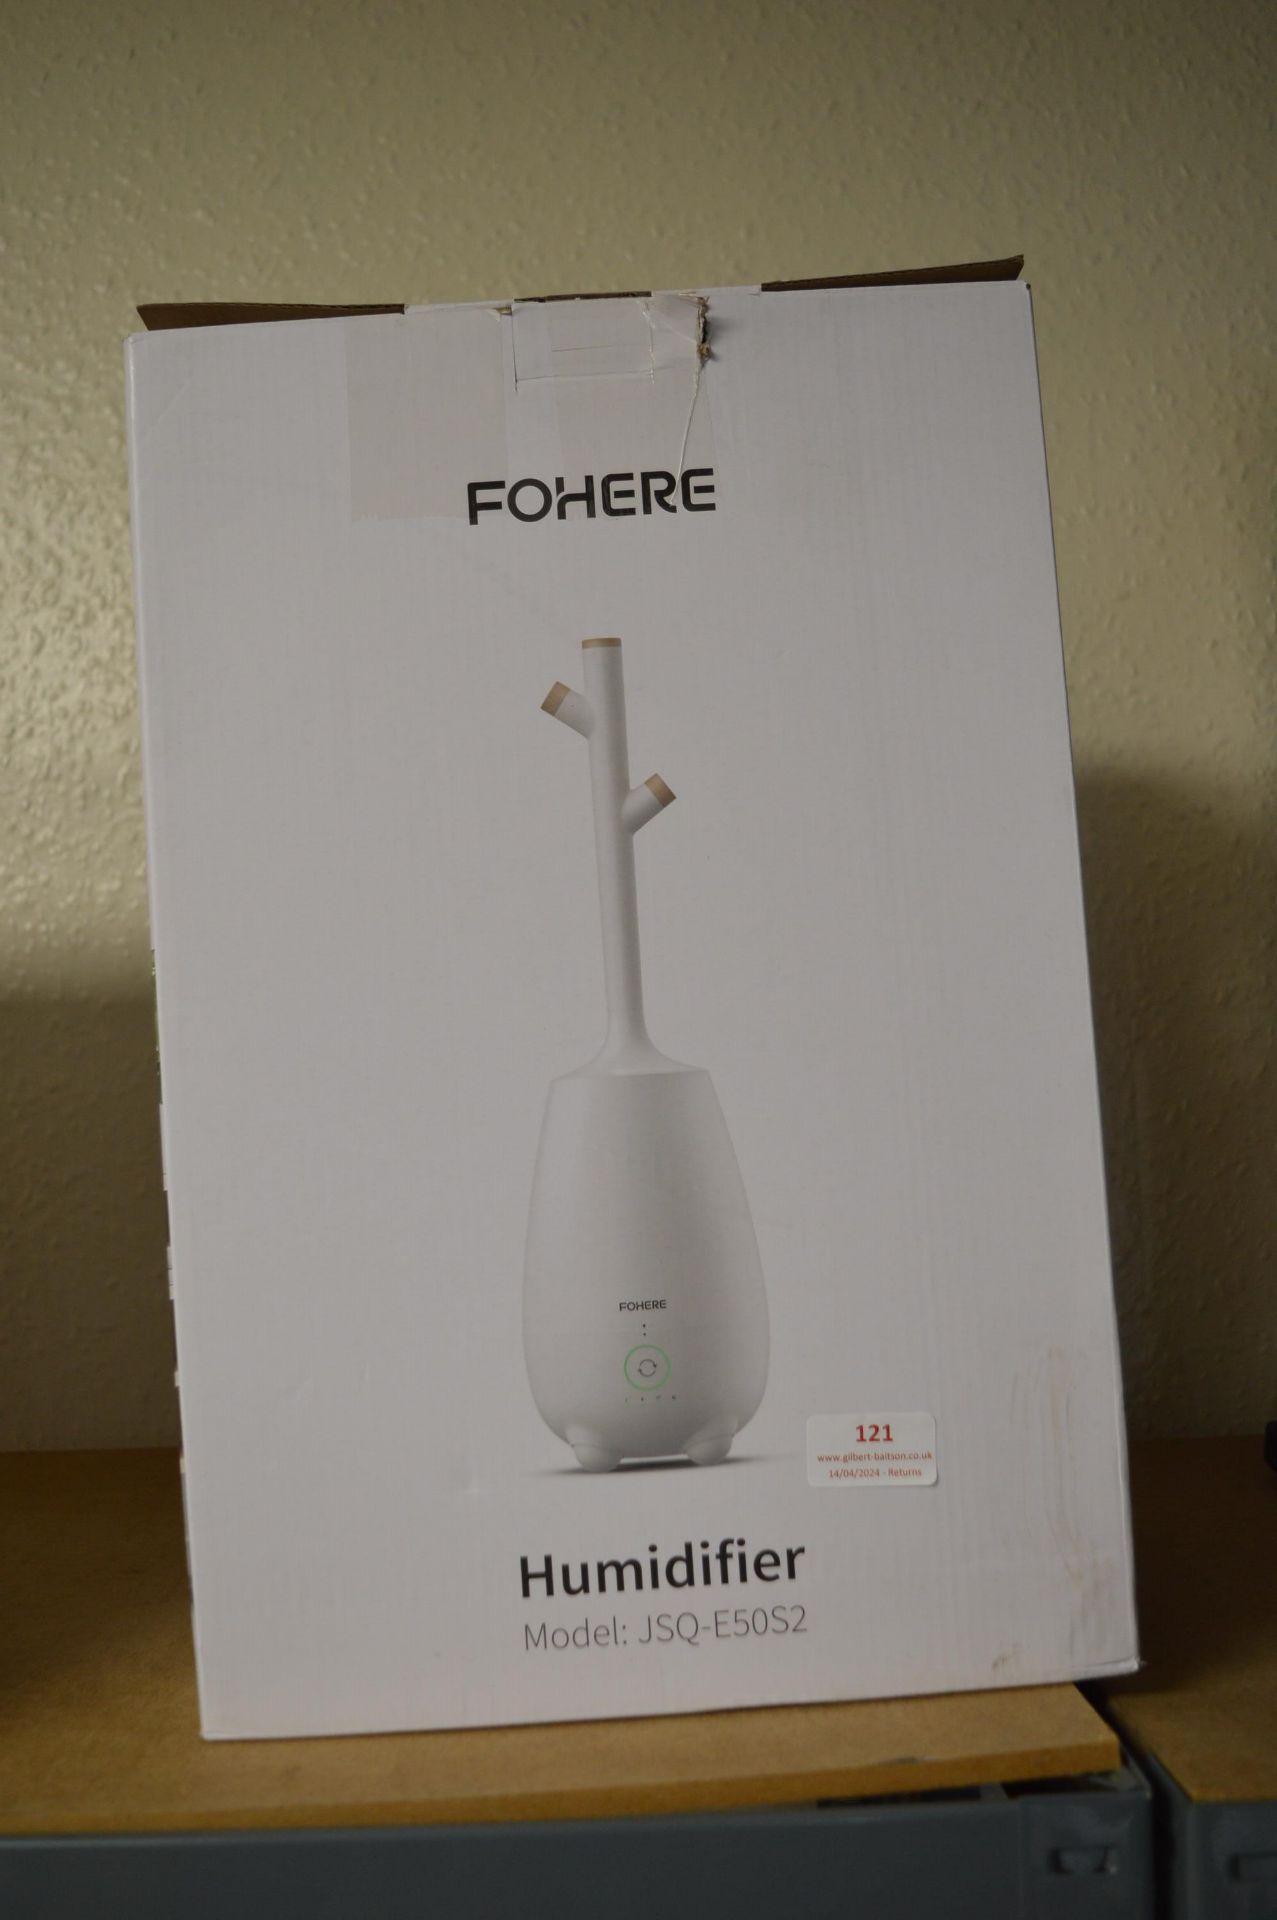 *Fohere Humidifier